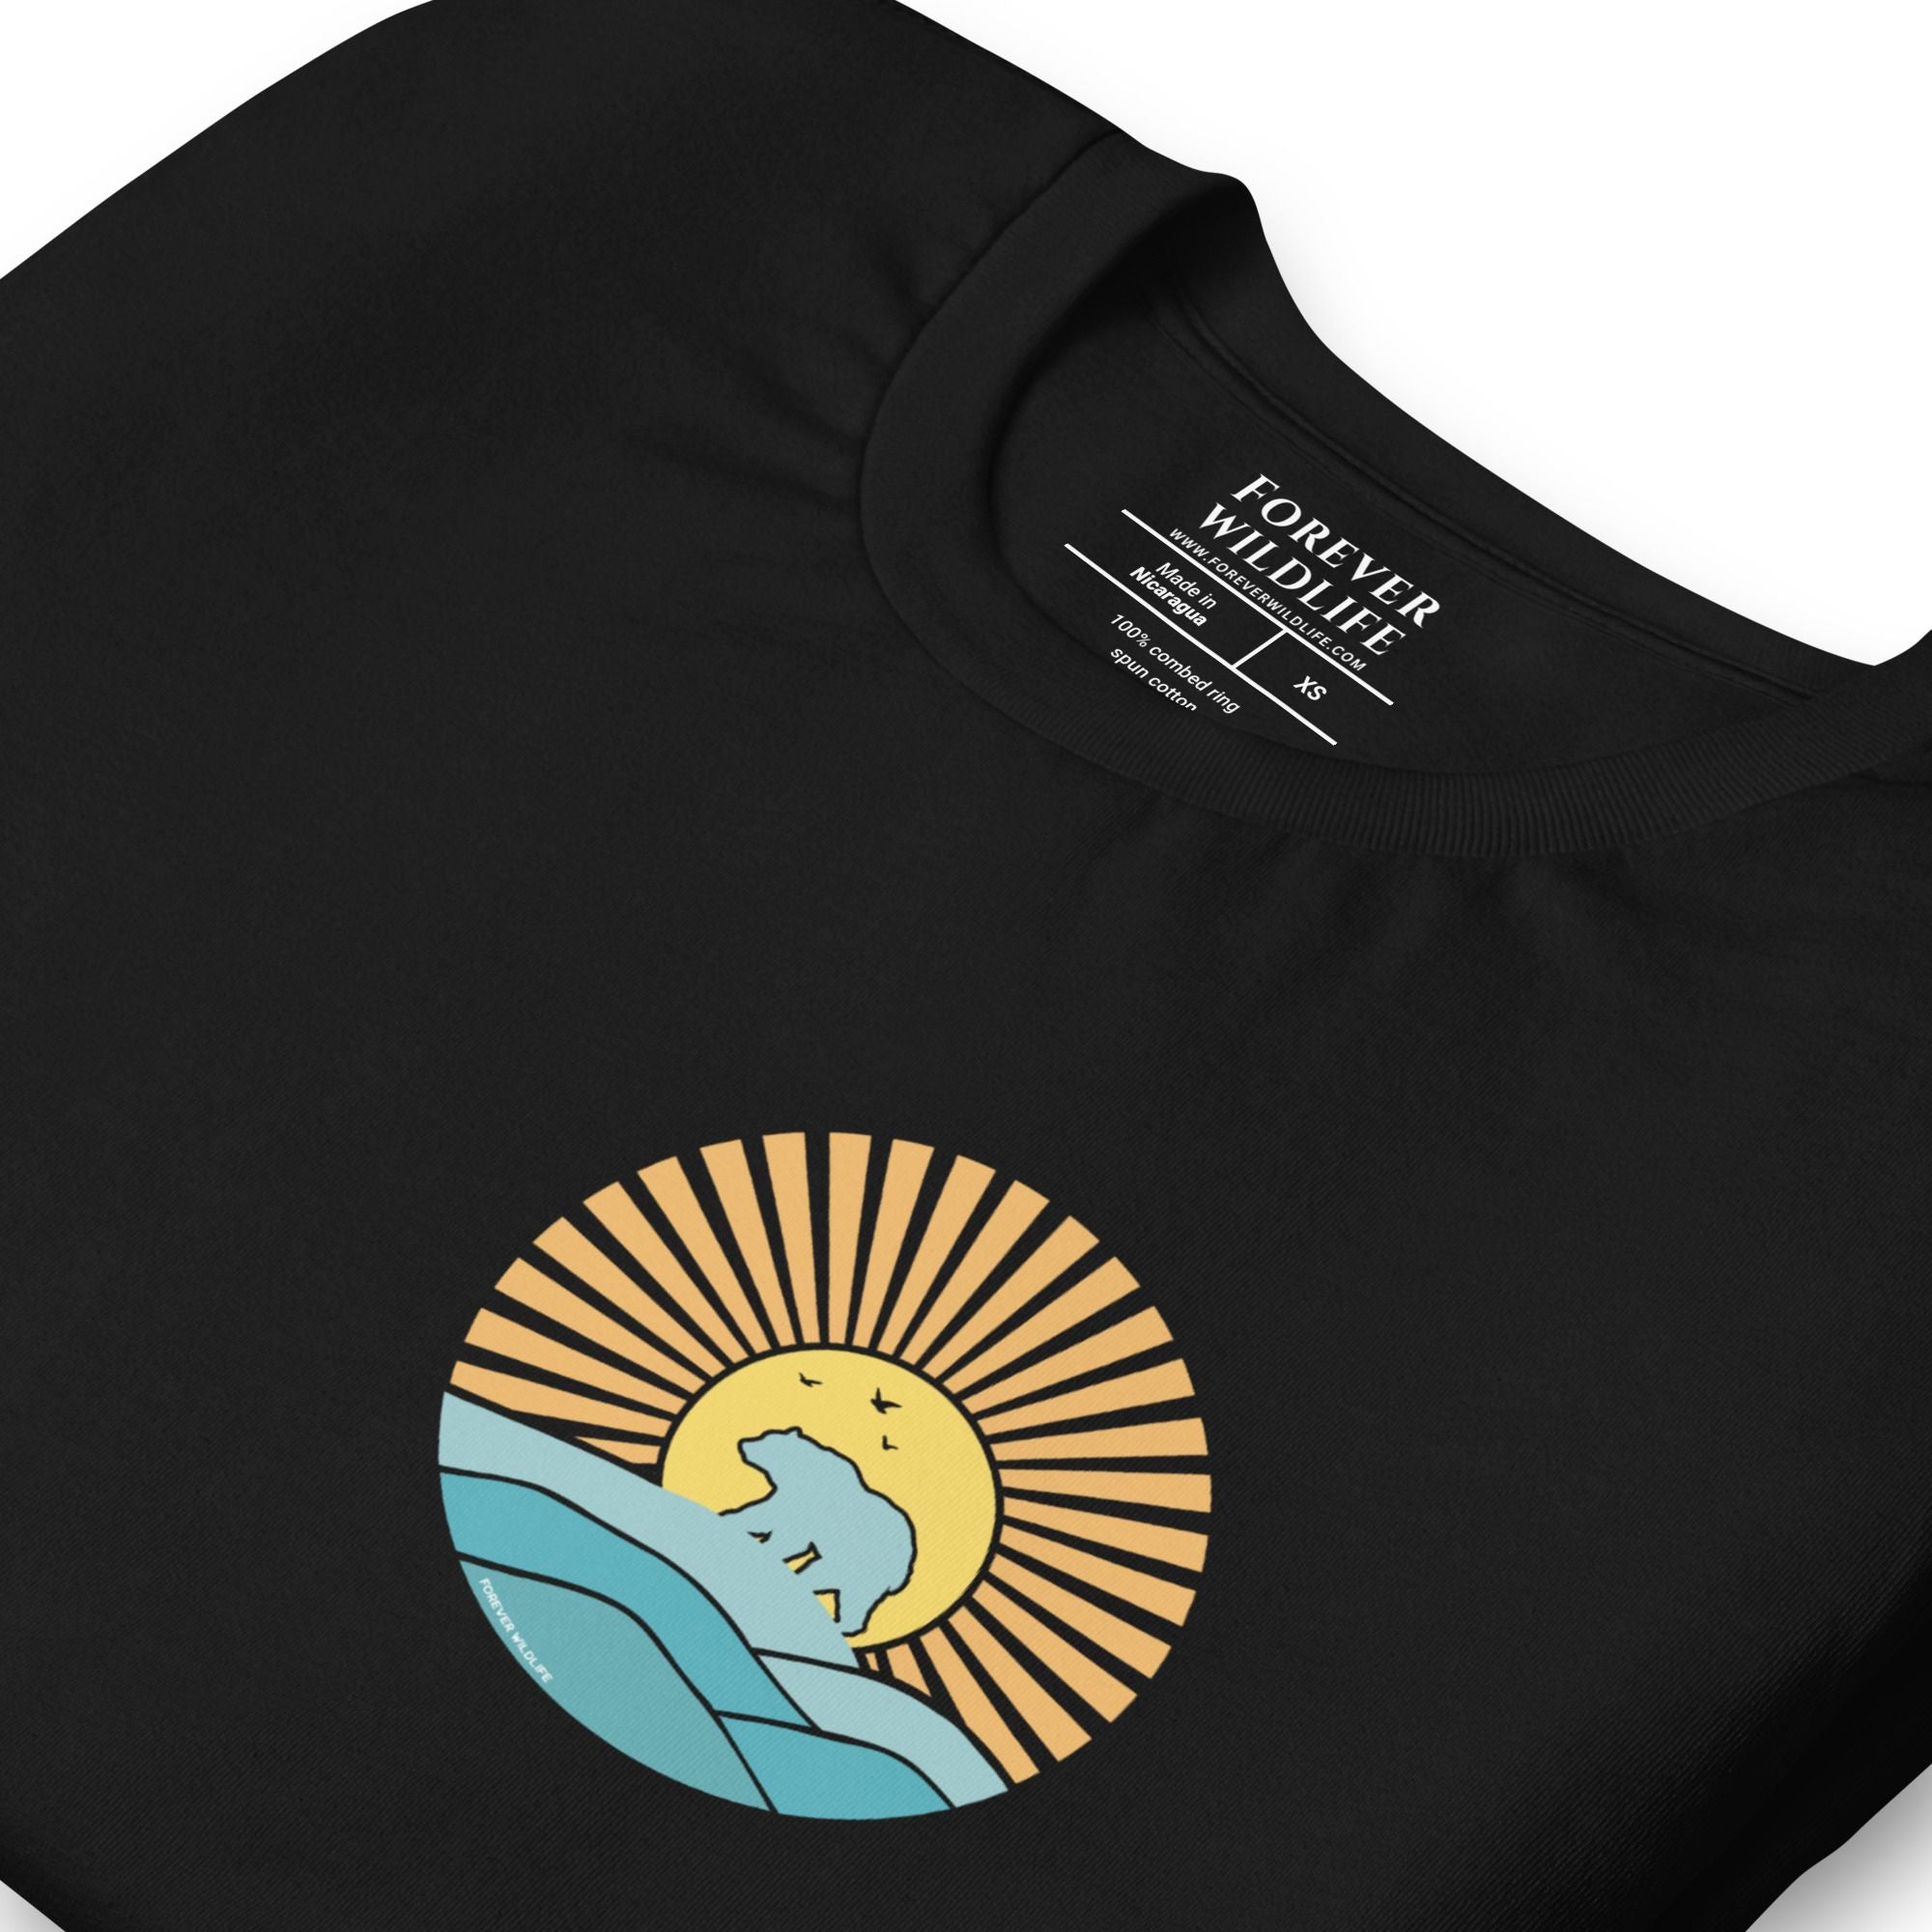 Polar Bear Shirt, stunning black Polar Bear T-Shirt with Polar Bear graphic with sunset by Forever Wildlife selling Wildlife T Shirts.